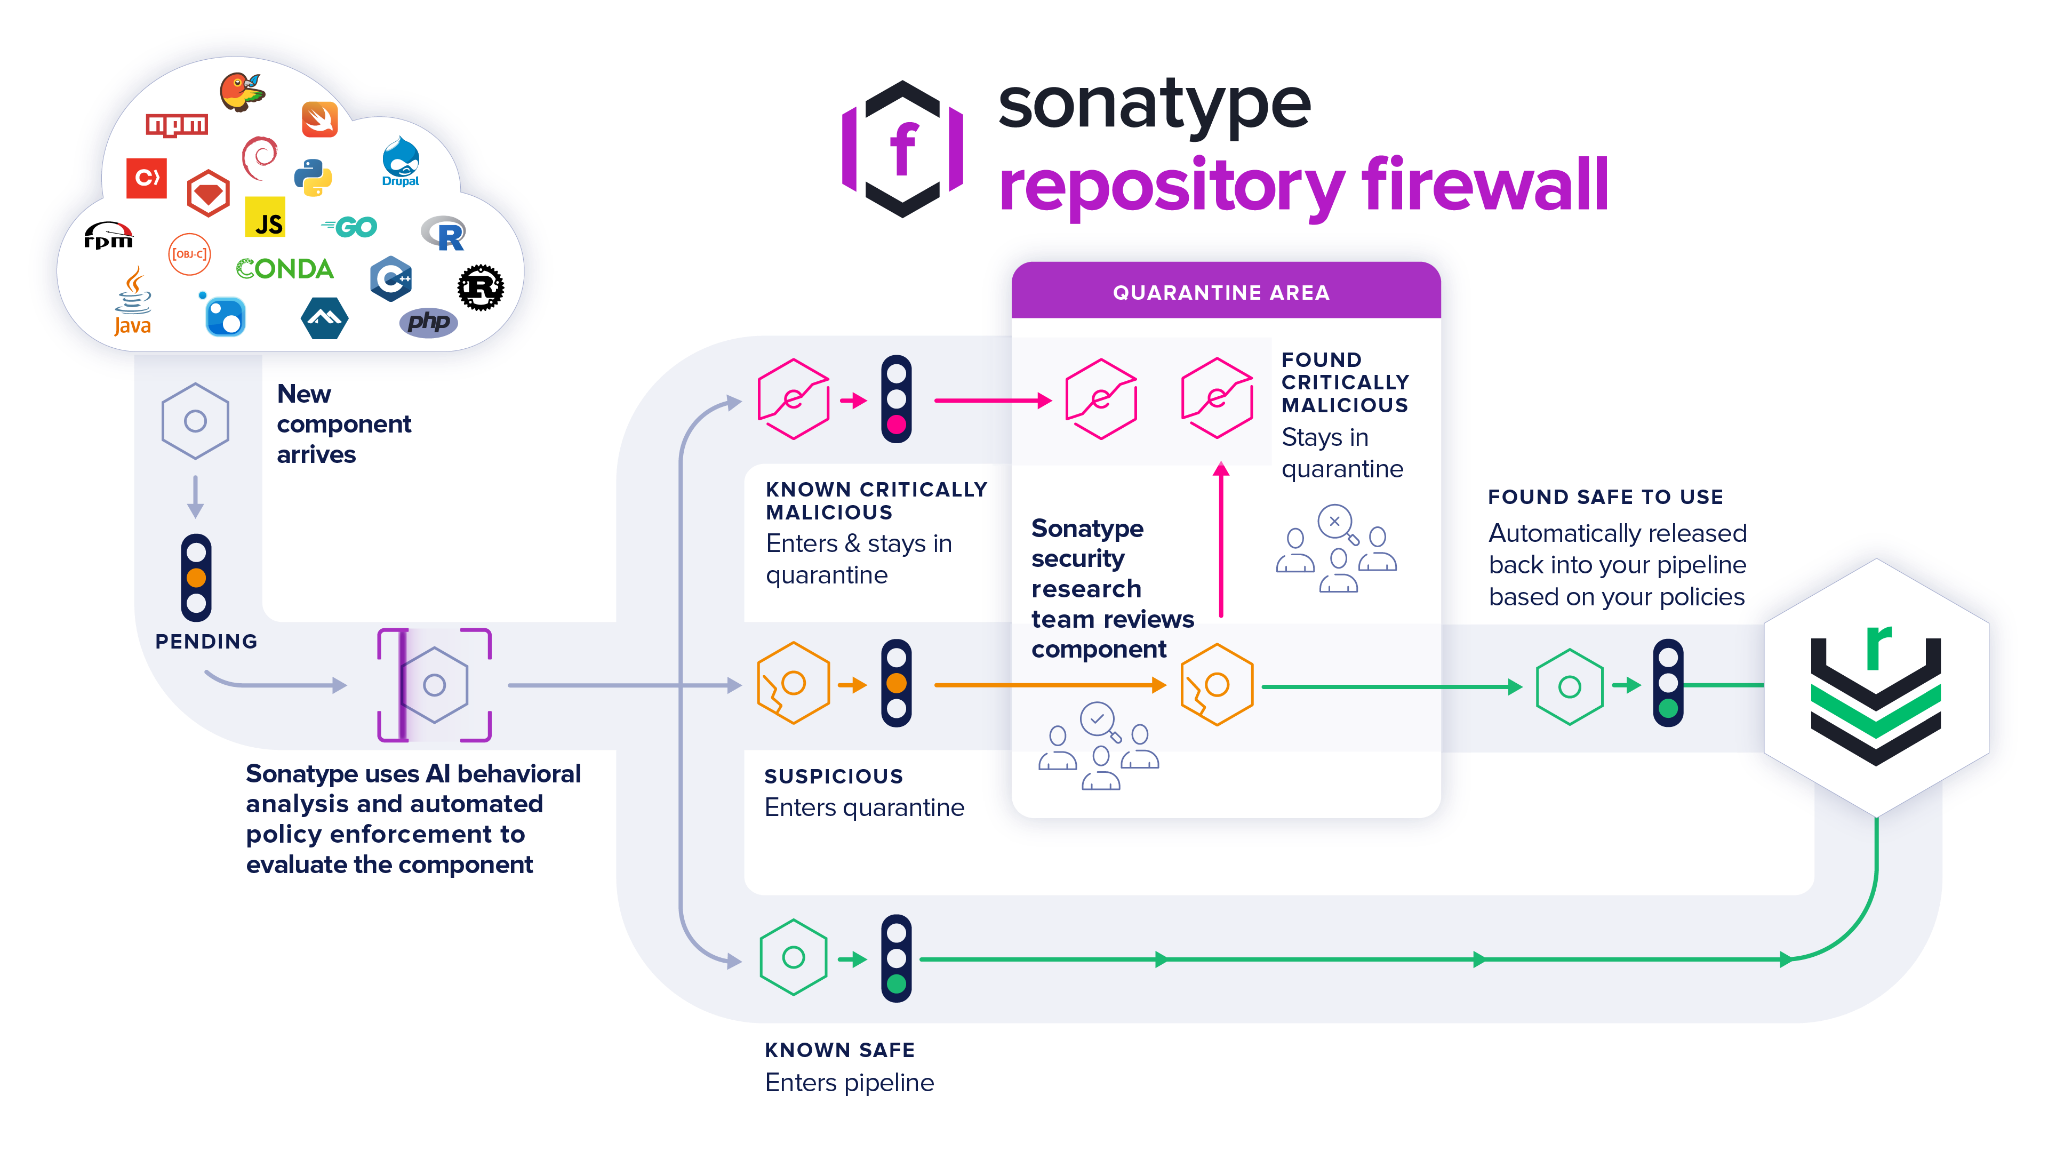 Sonatype Repository Firewall flowchart.